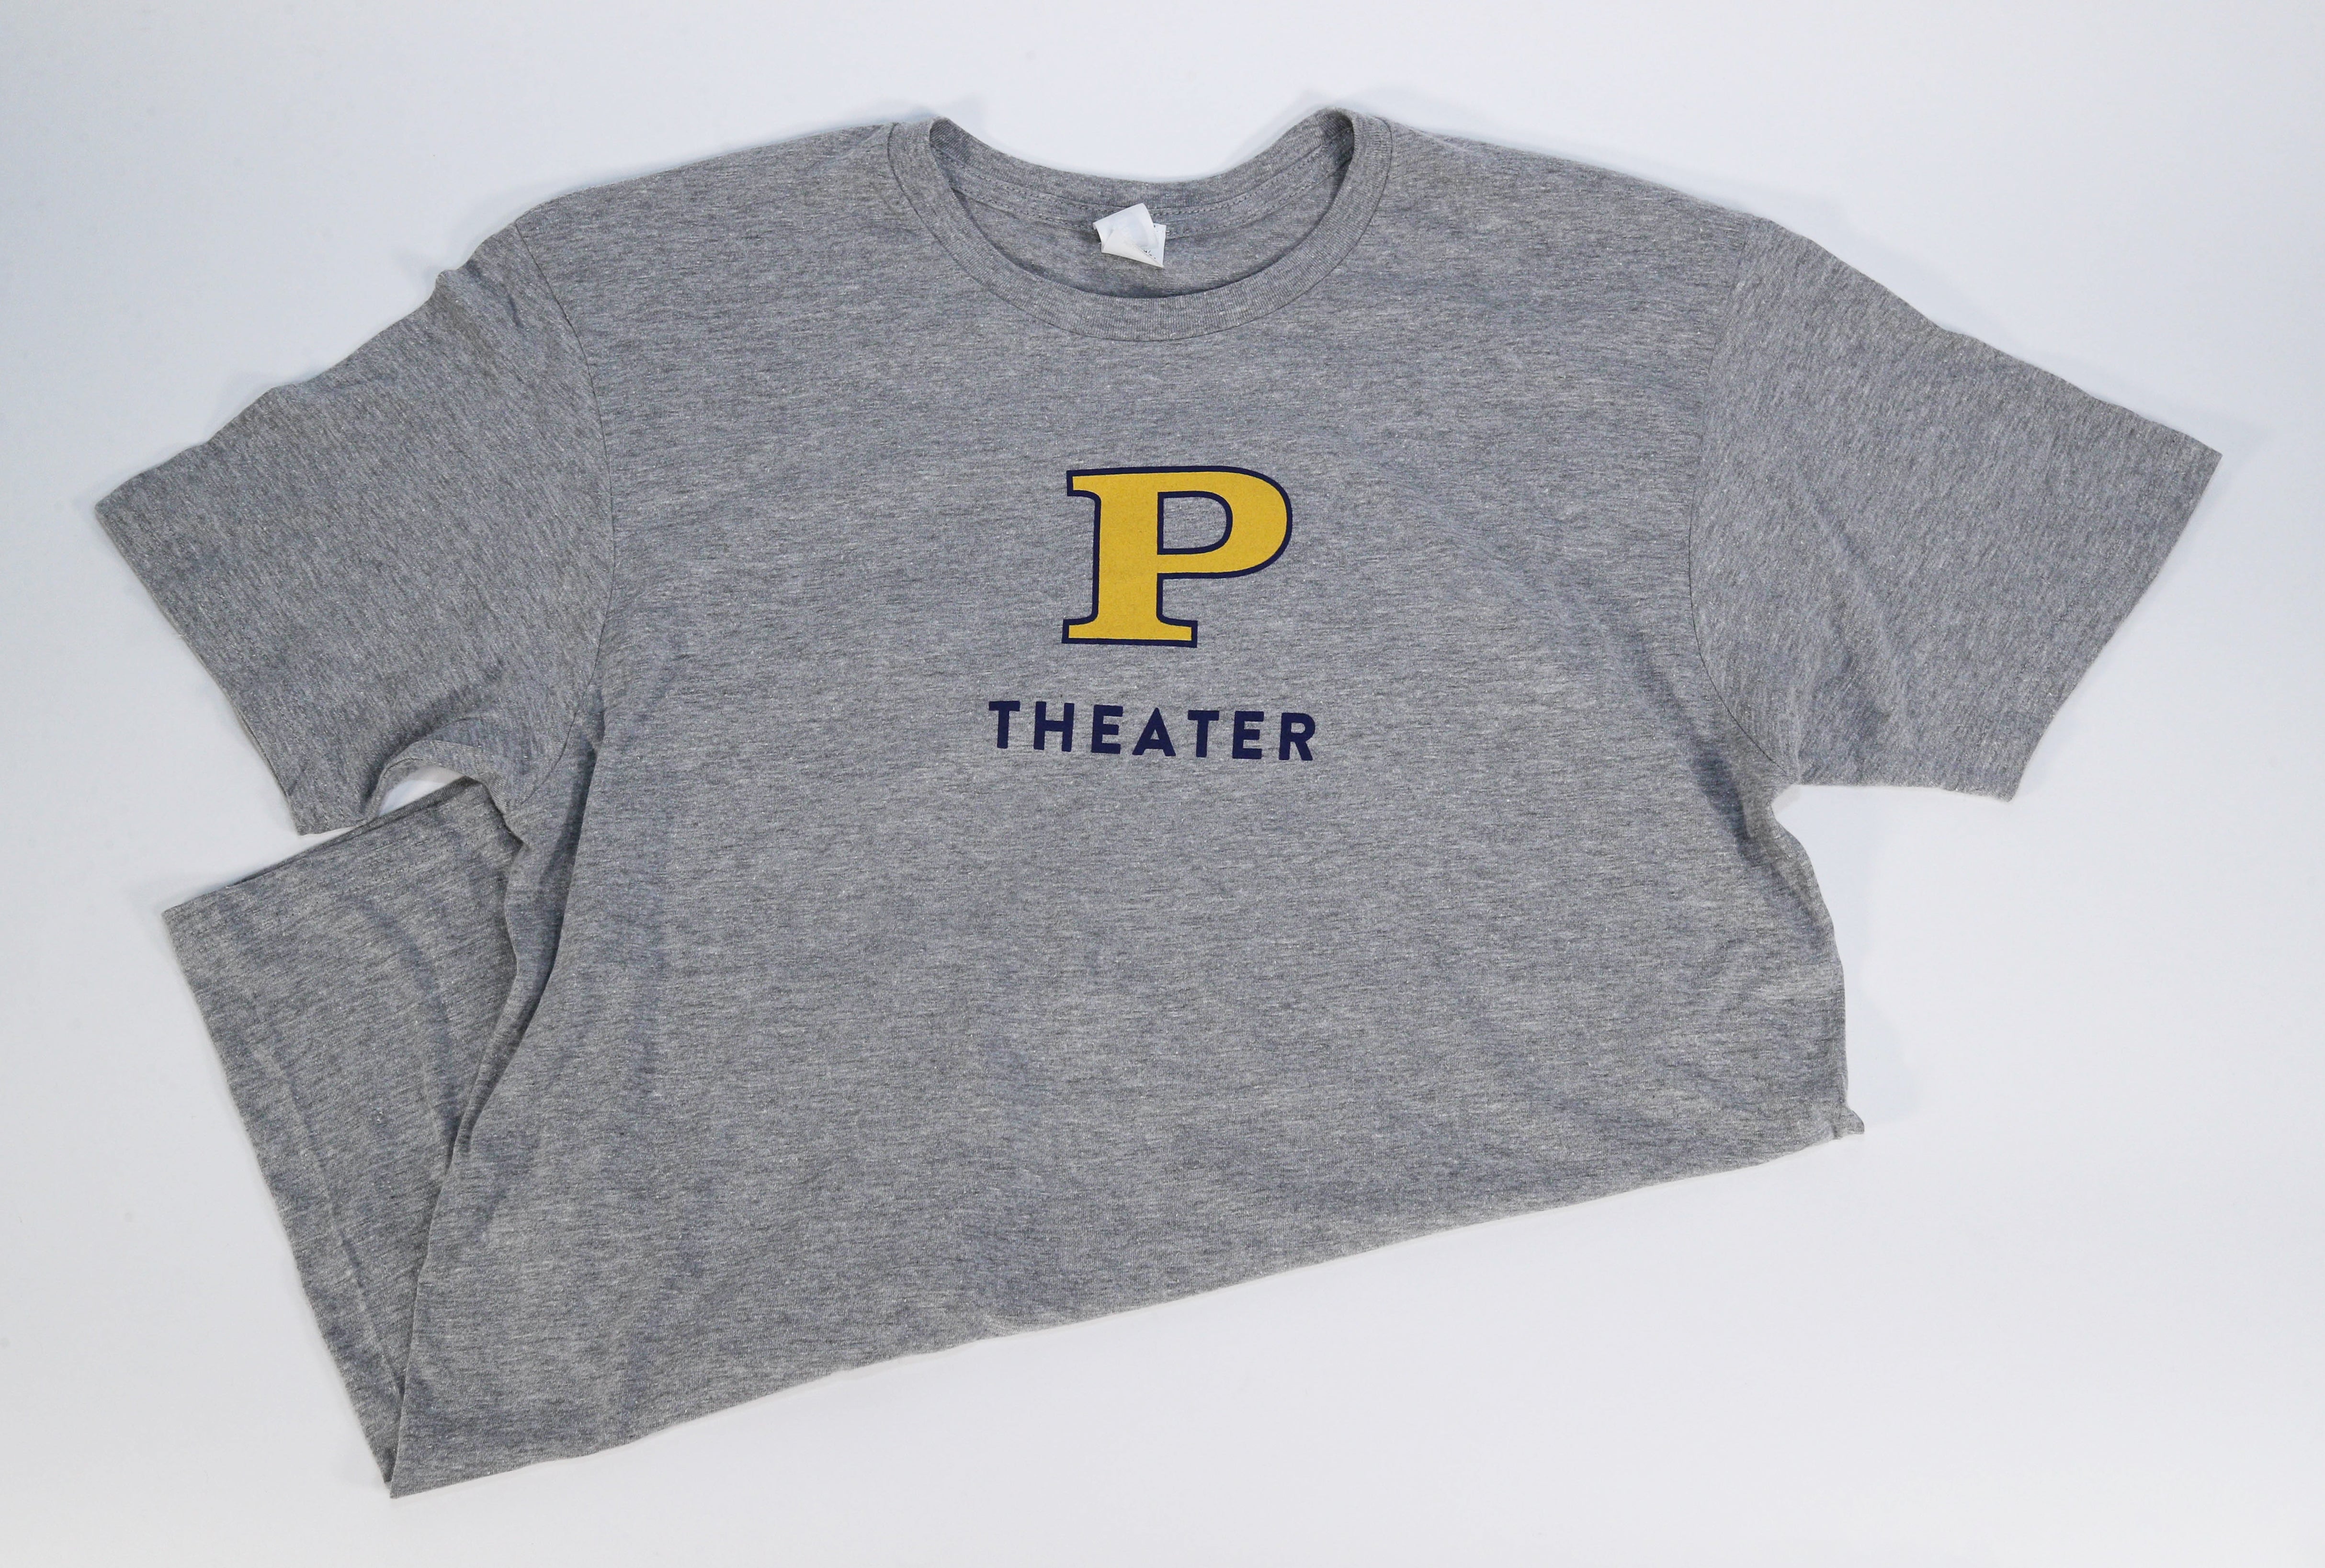 Peddie Theater Tee Shirt